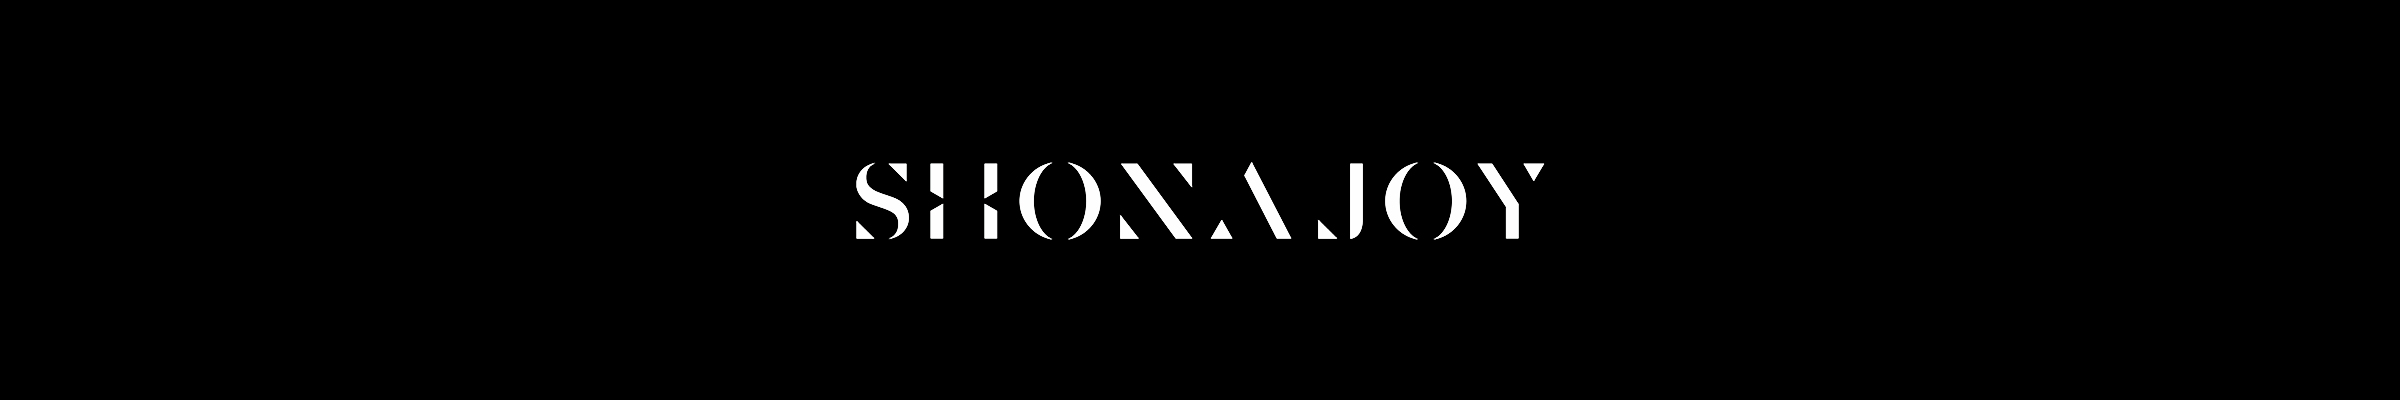 shona-joy-banner